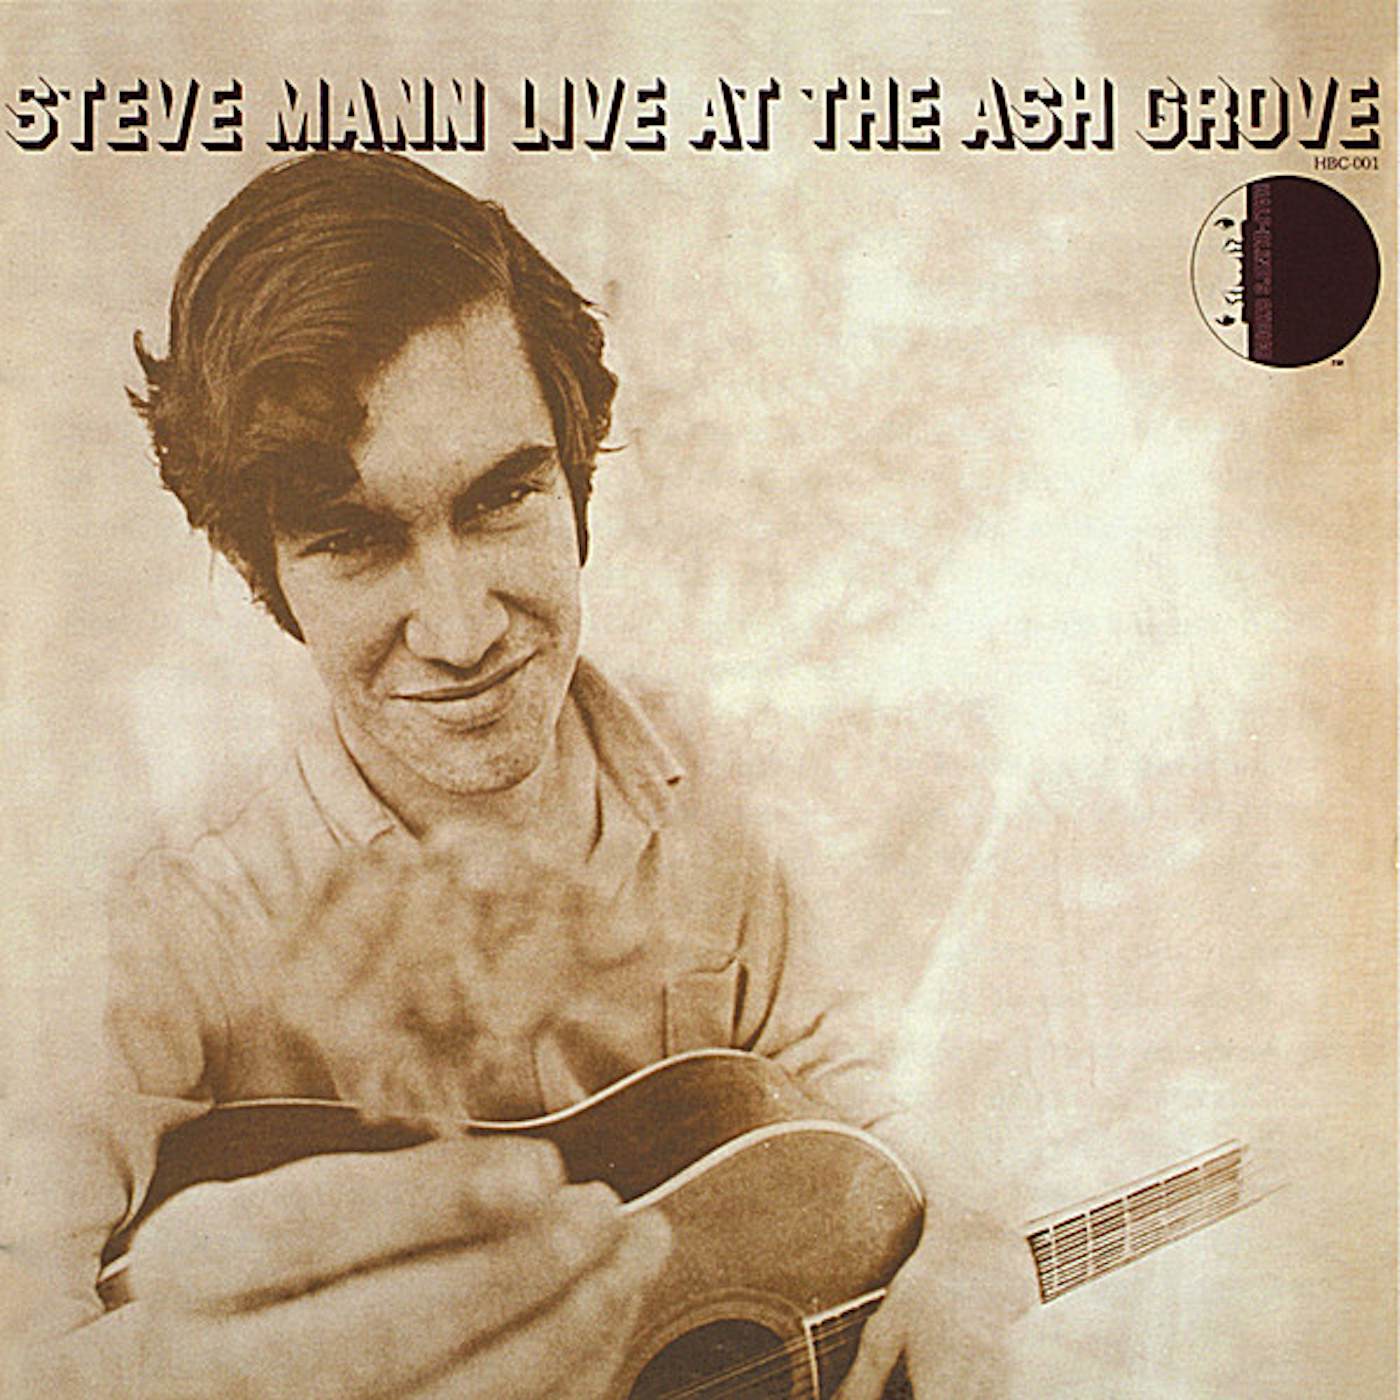 STEVE MANN LIVE AT THE ASH GROVE CD